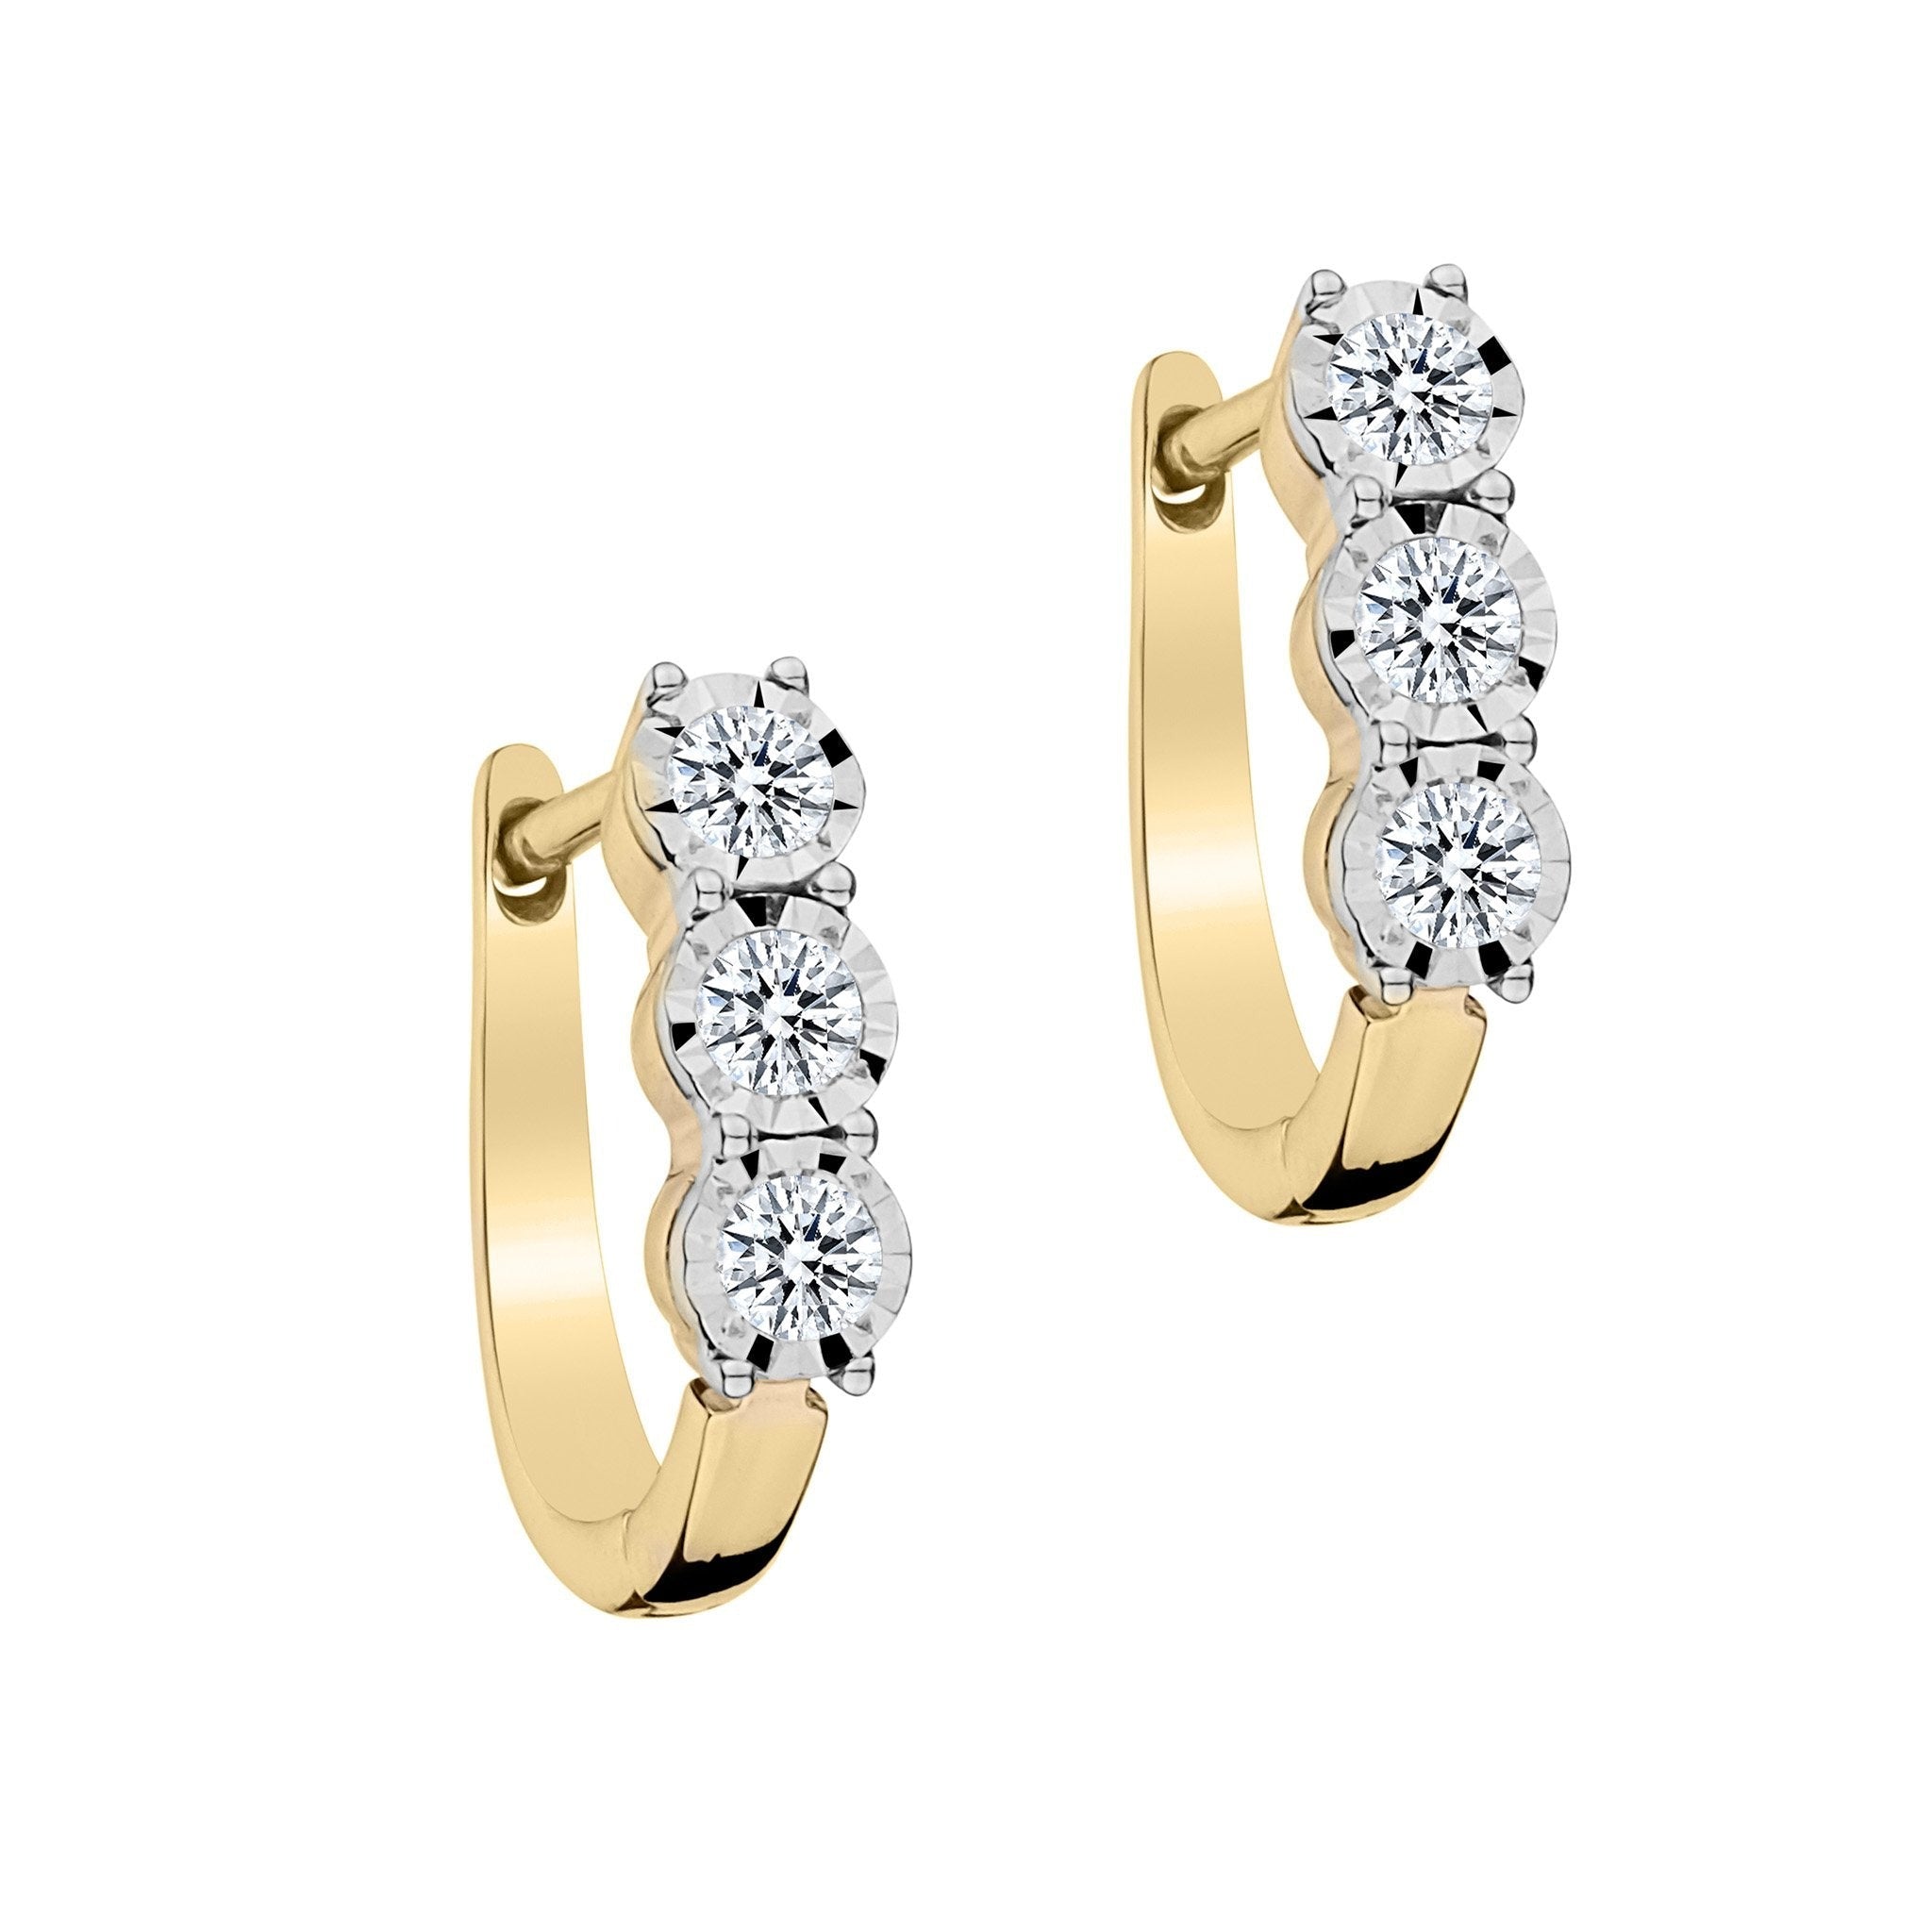 .50 Carat Diamond "Past, Present, Future" Earrings,  10kt Yellow Gold. Hoops. Hoop Earrings. Griffin Jewellery Designs